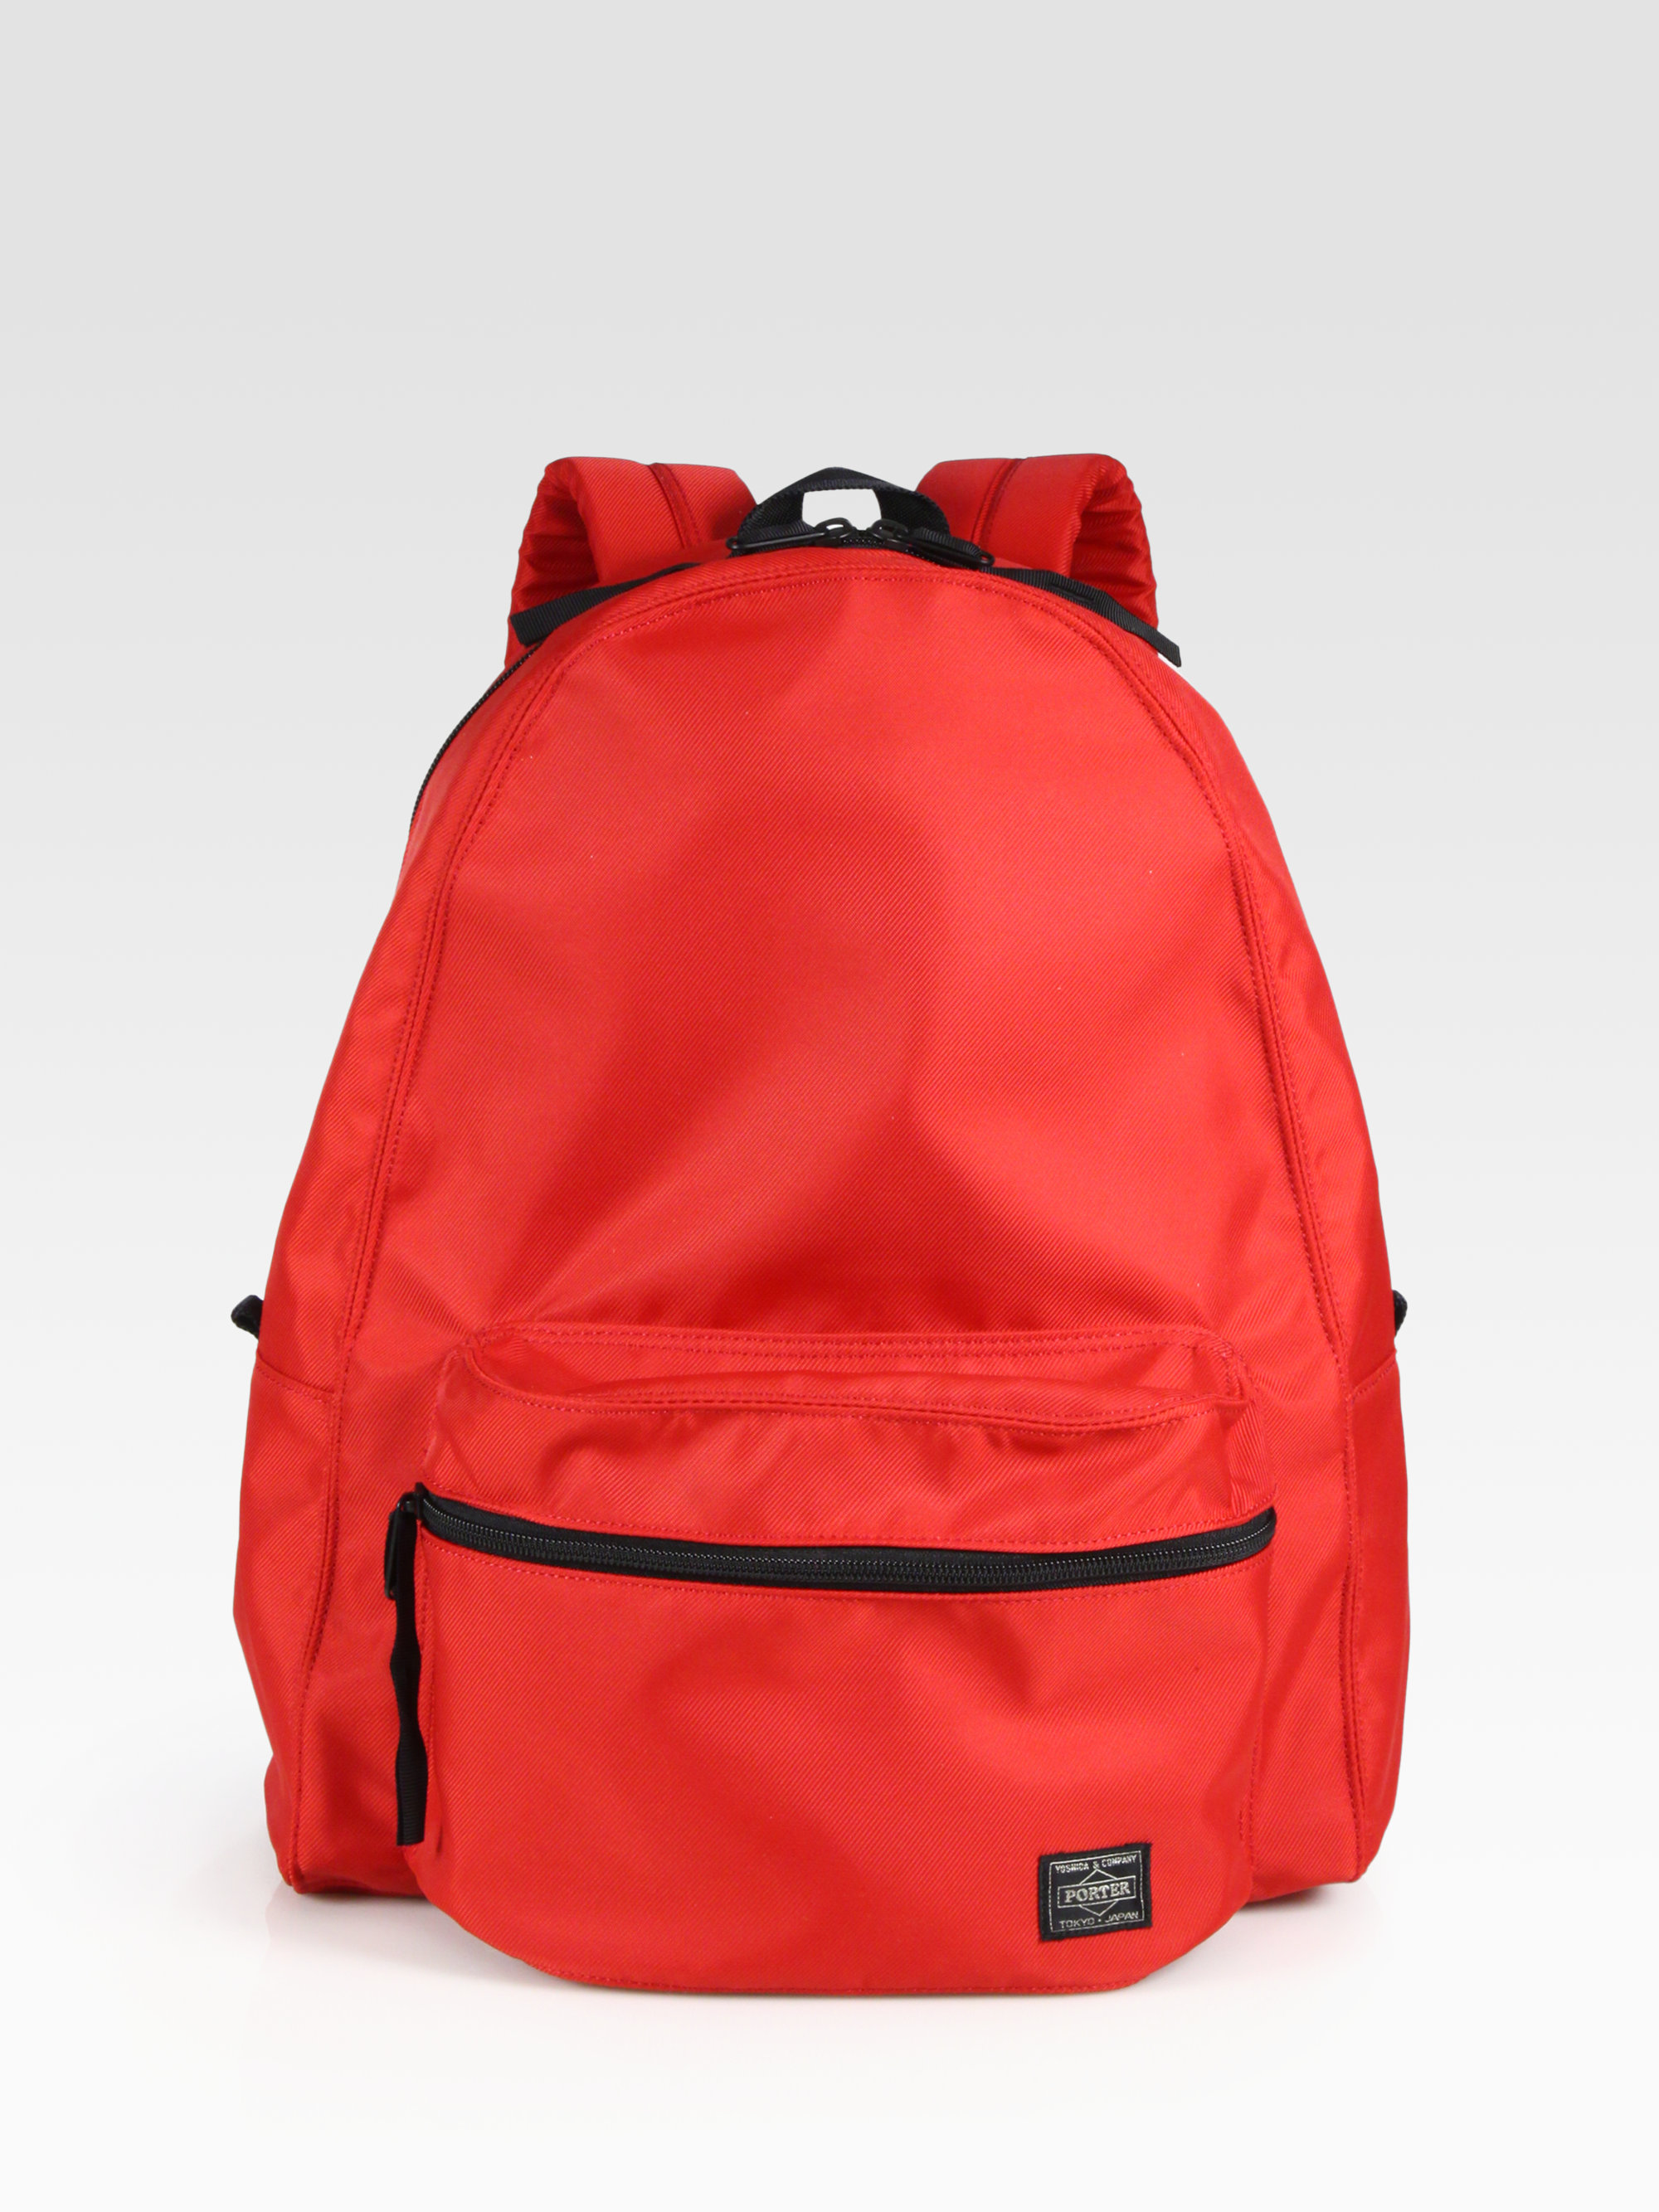 Lyst - Porter Daypack Bag in Red for Men